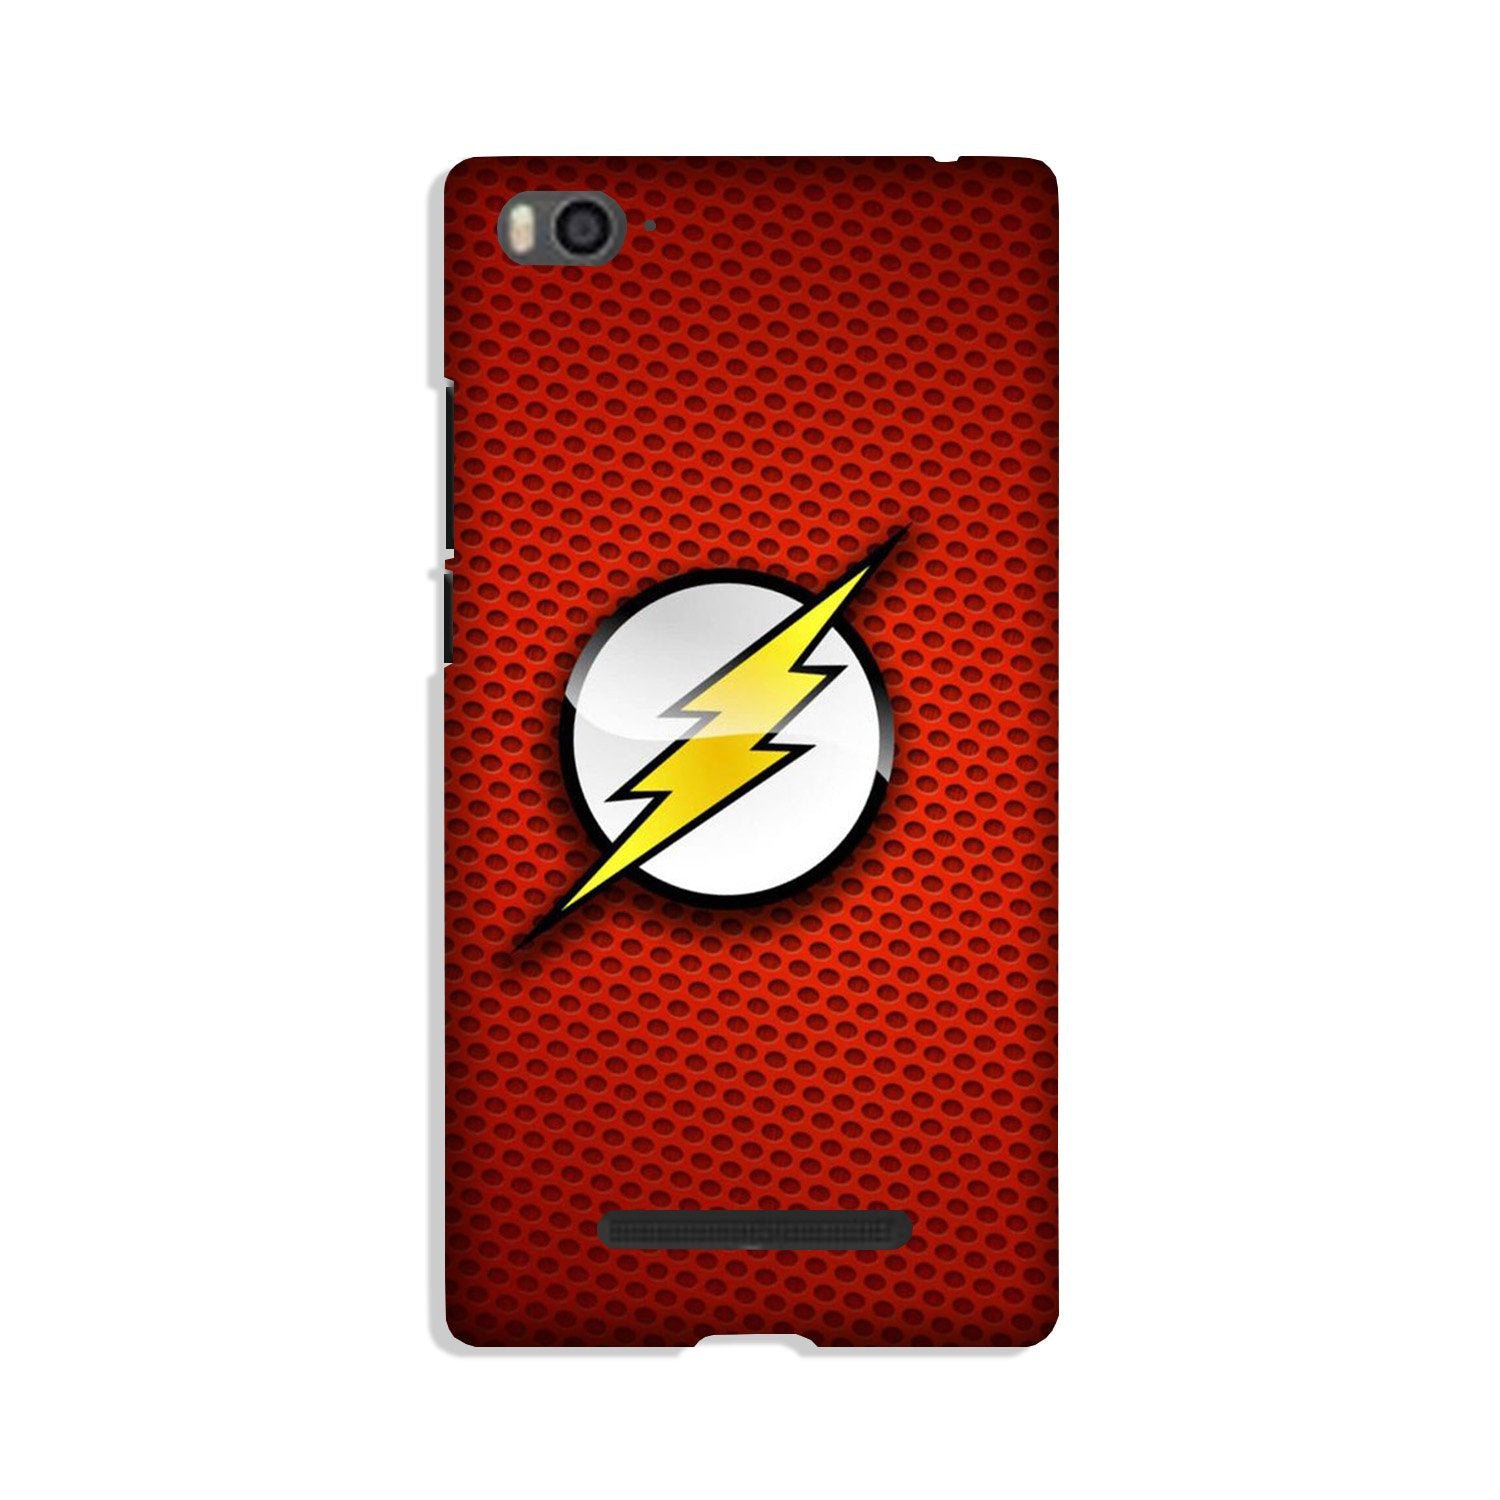 Flash Case for Xiaomi Redmi 5A (Design No. 252)